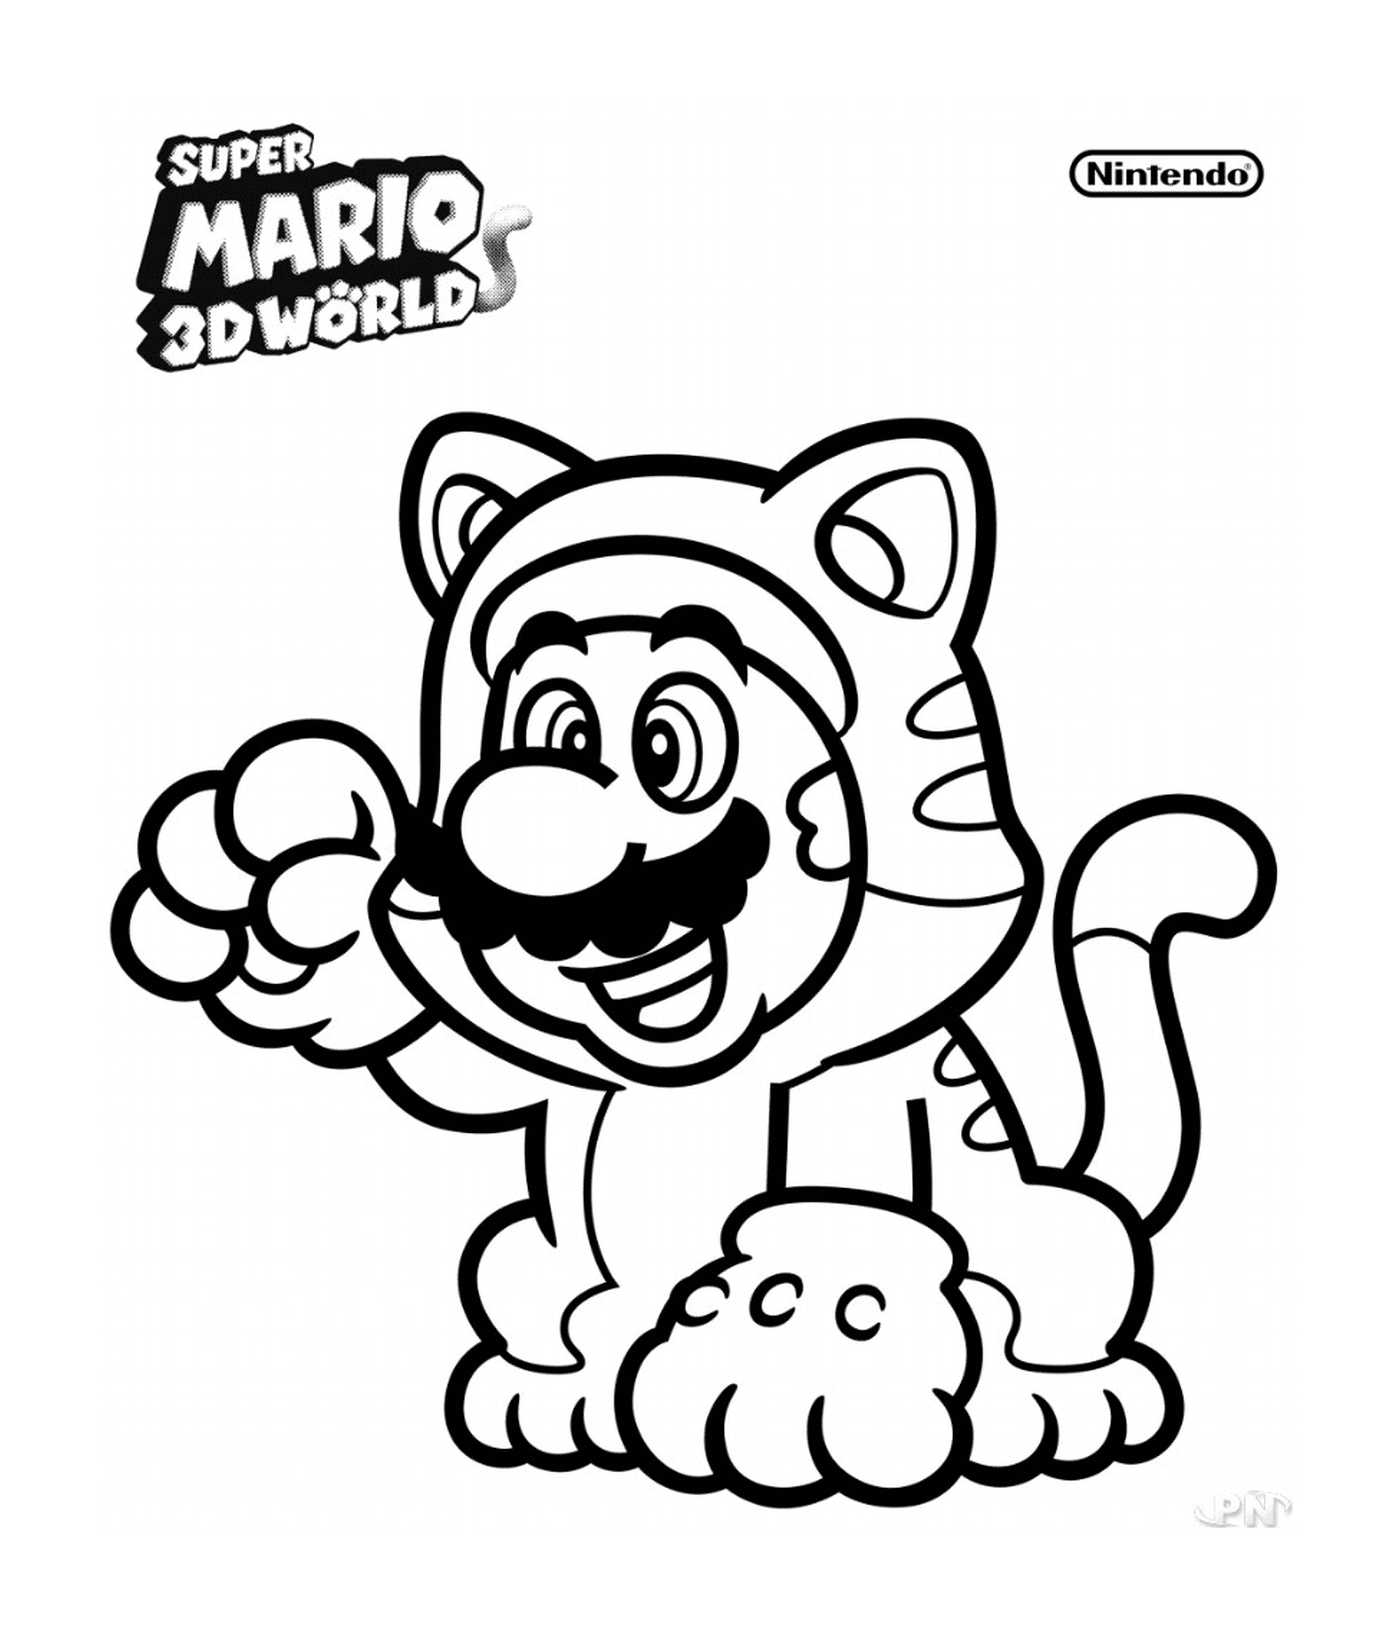  Mario Odyssey, ein Katzencharakter 